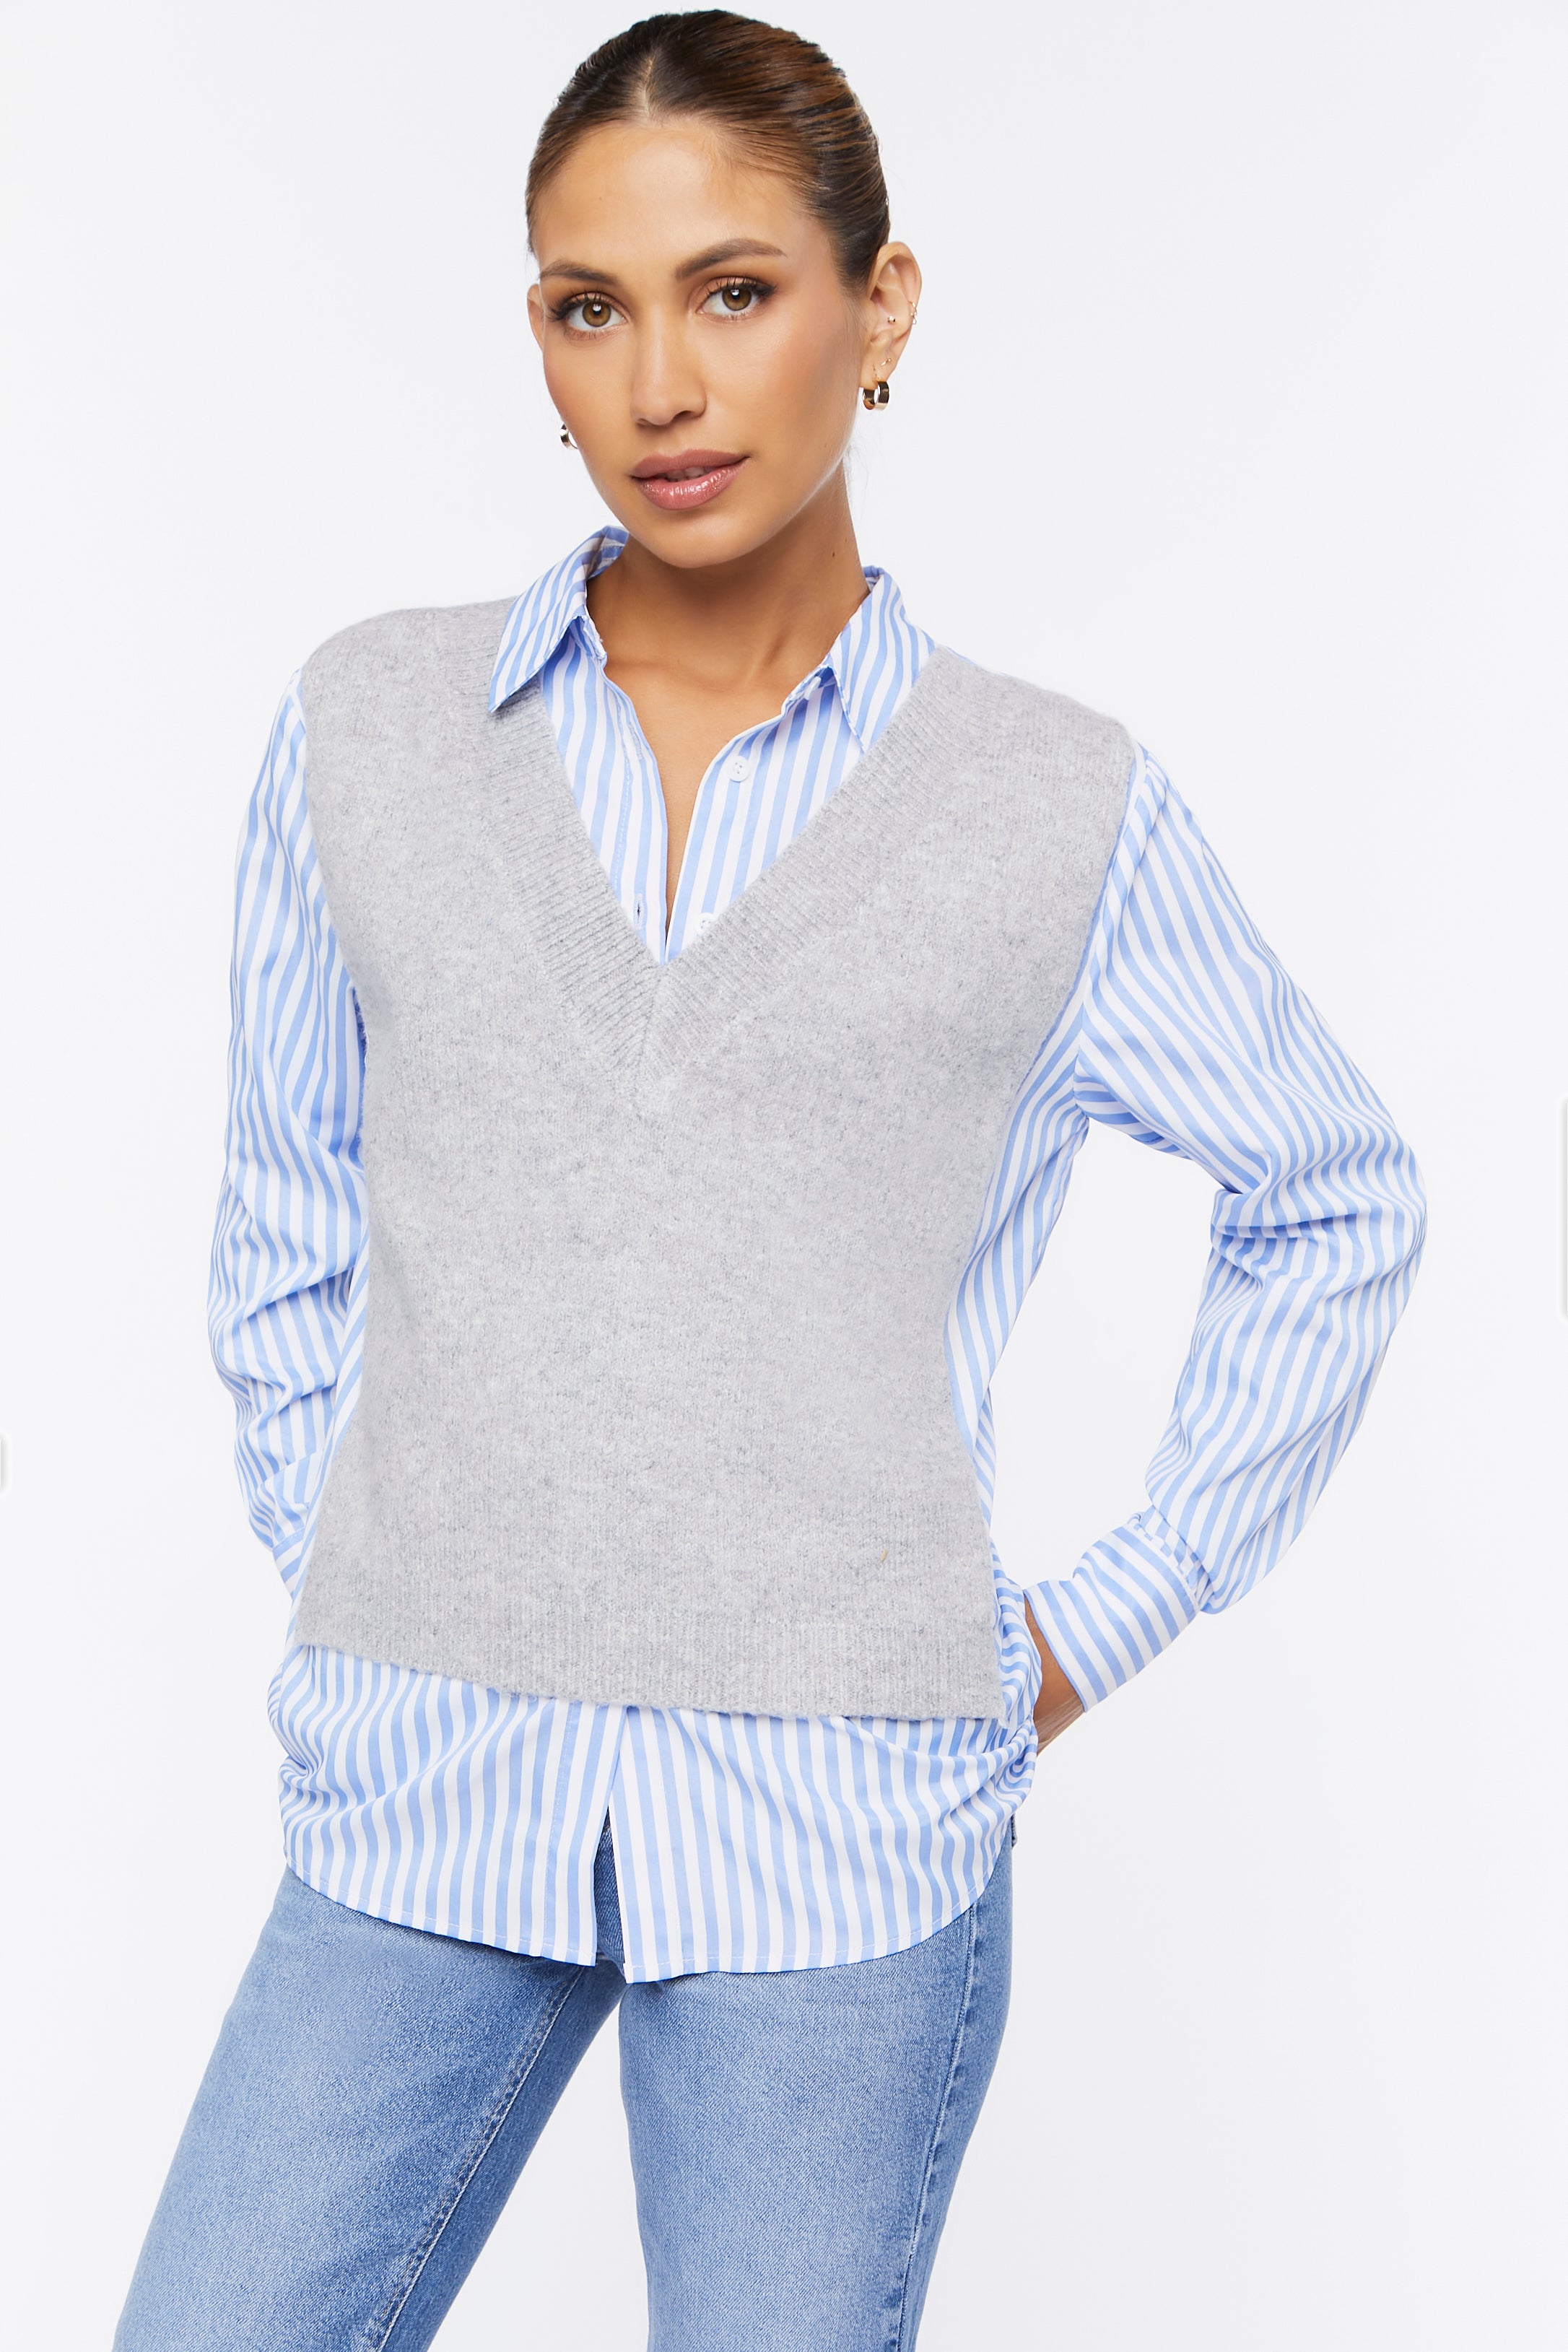 Greymulti Sweater Vest Combo Shirt 1